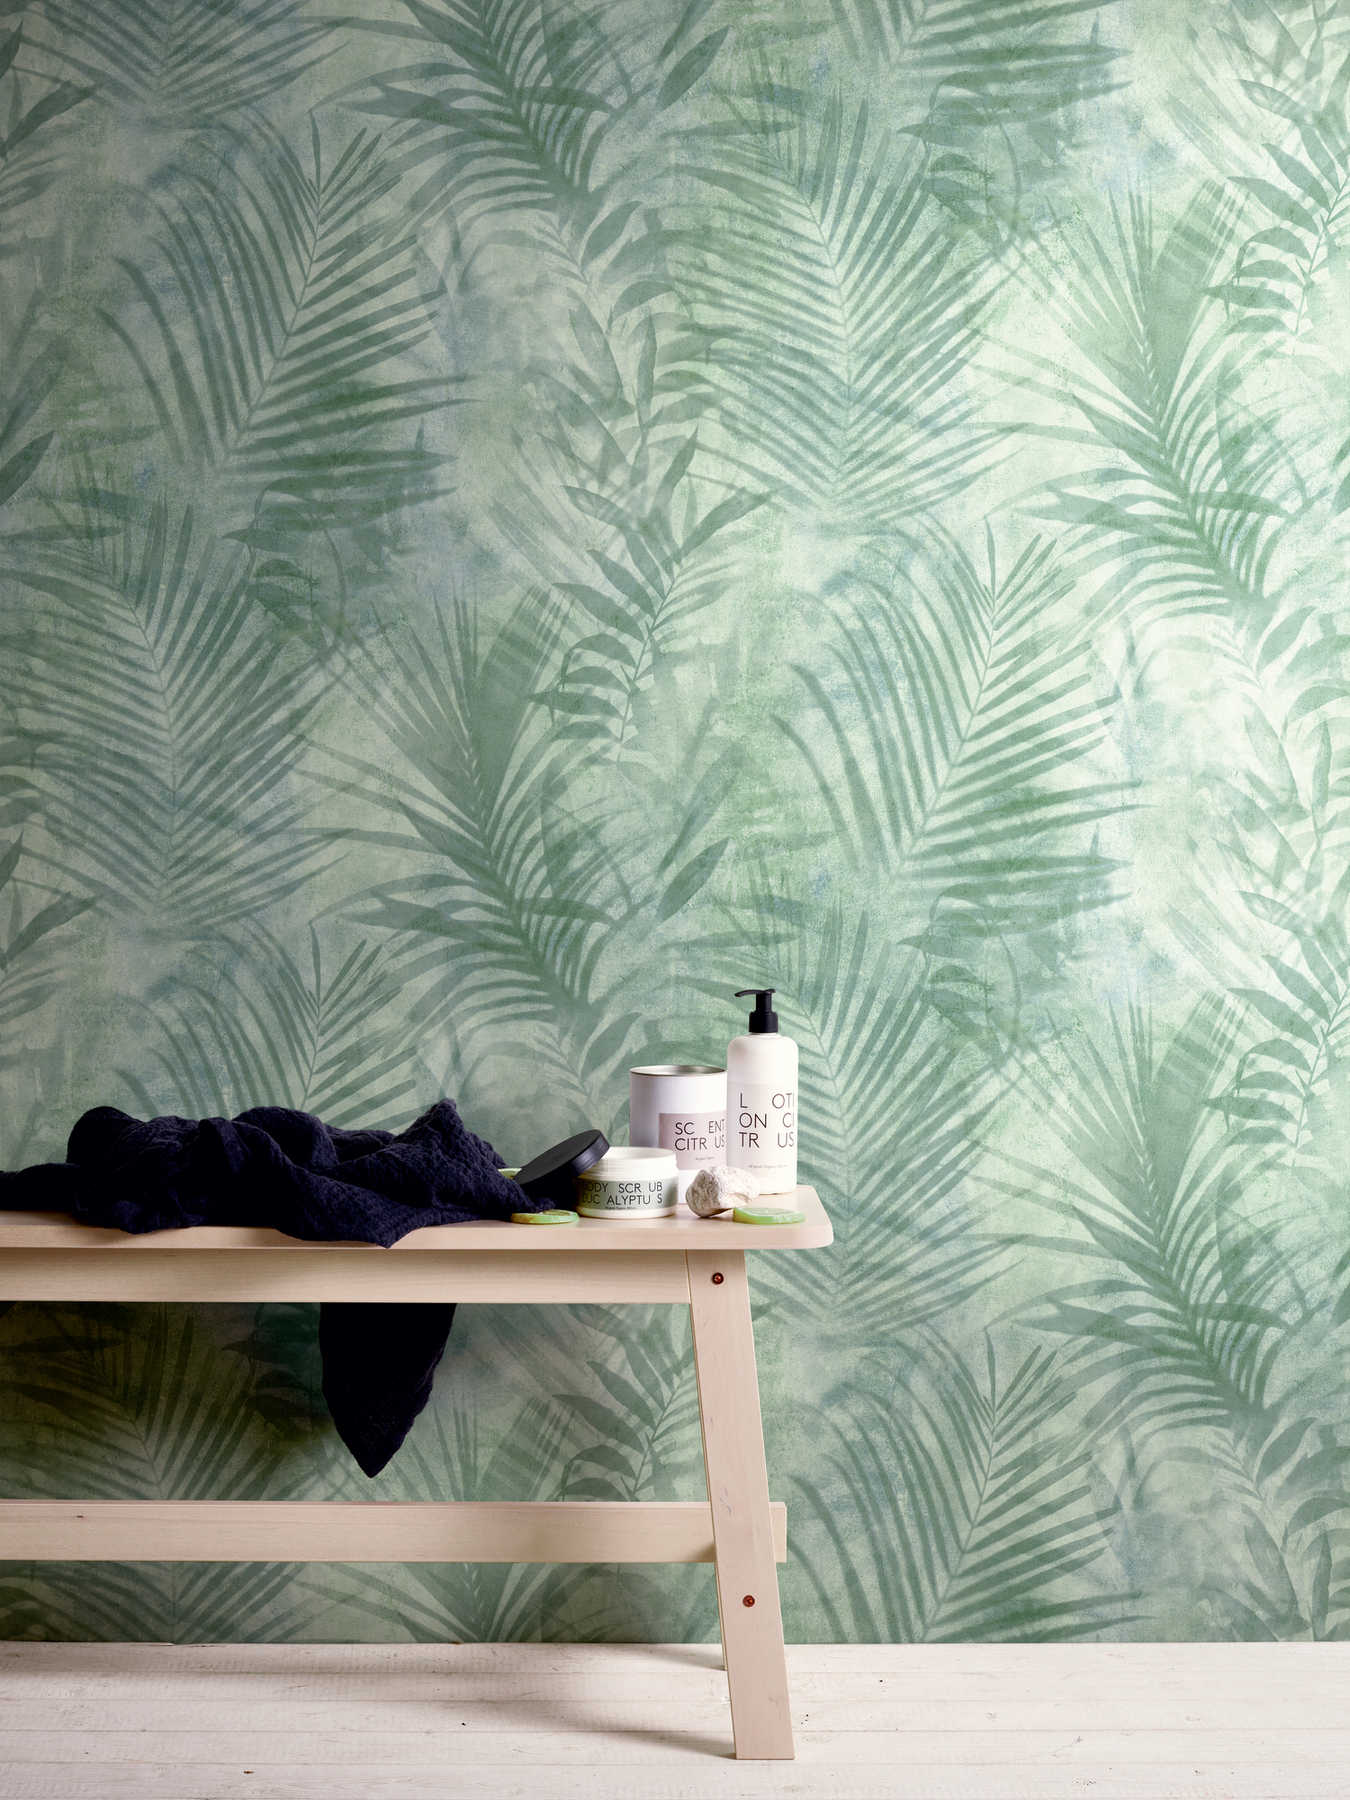             papel pintado con motivos de palmeras en aspecto de lino - verde, azul, gris
        